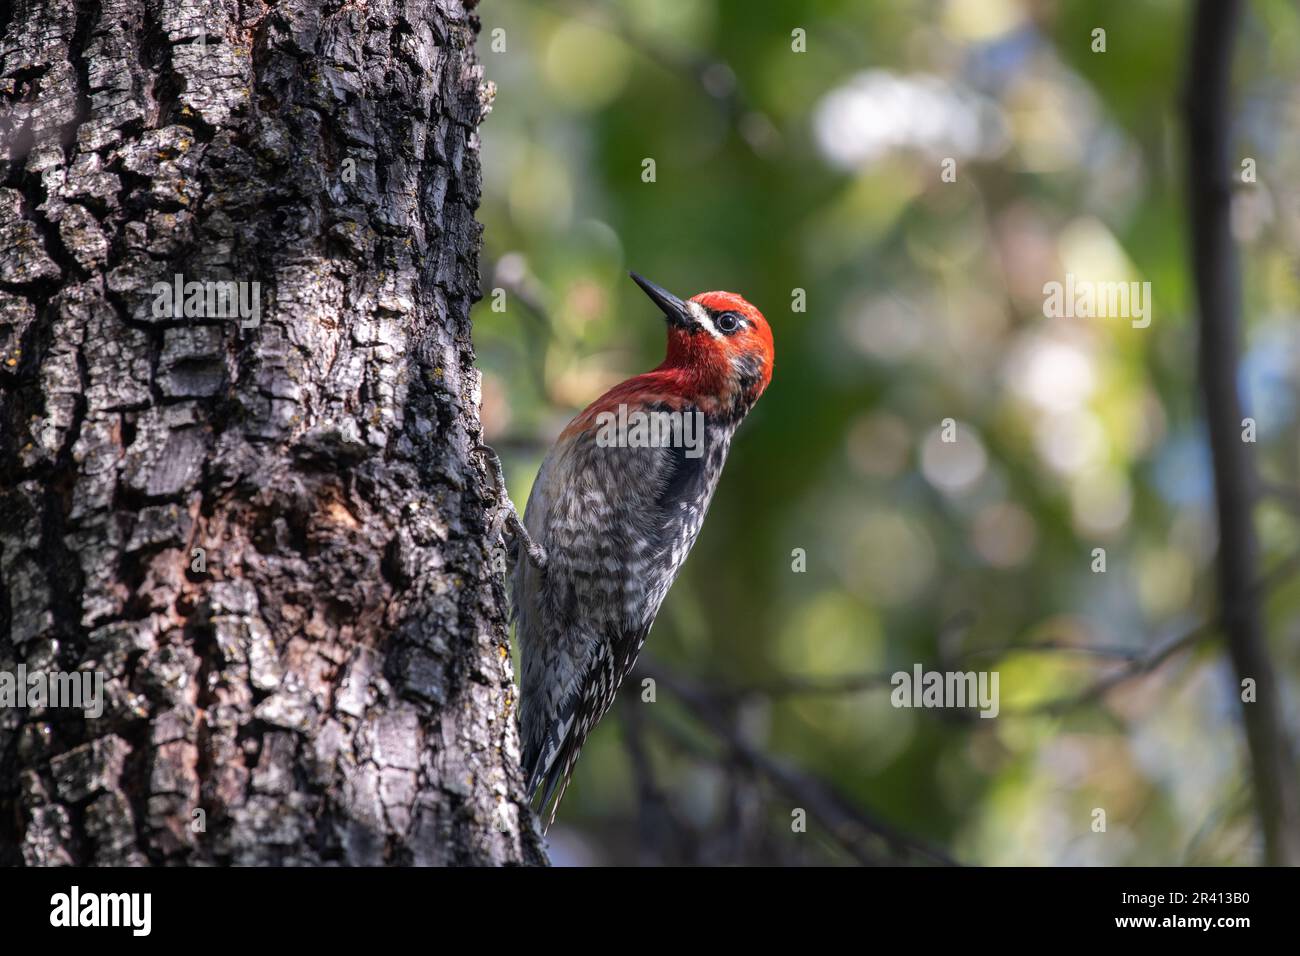 Red-headed sapsucker clinging onto a tree Stock Photo